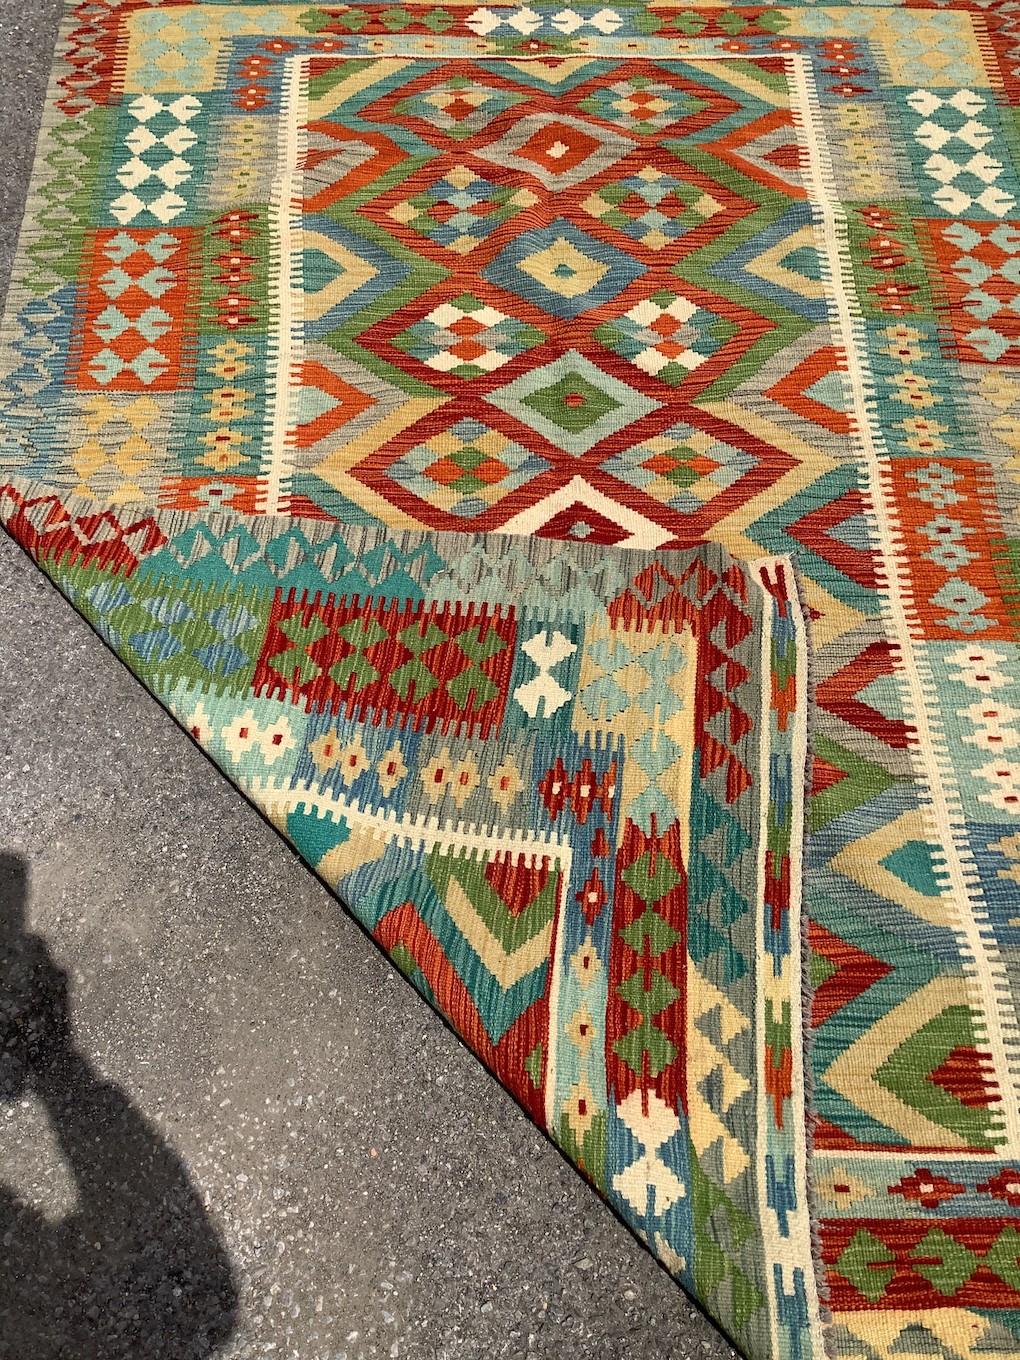 An Anatolian design polychrome flatweave Kilim carpet, 238 x 177cm